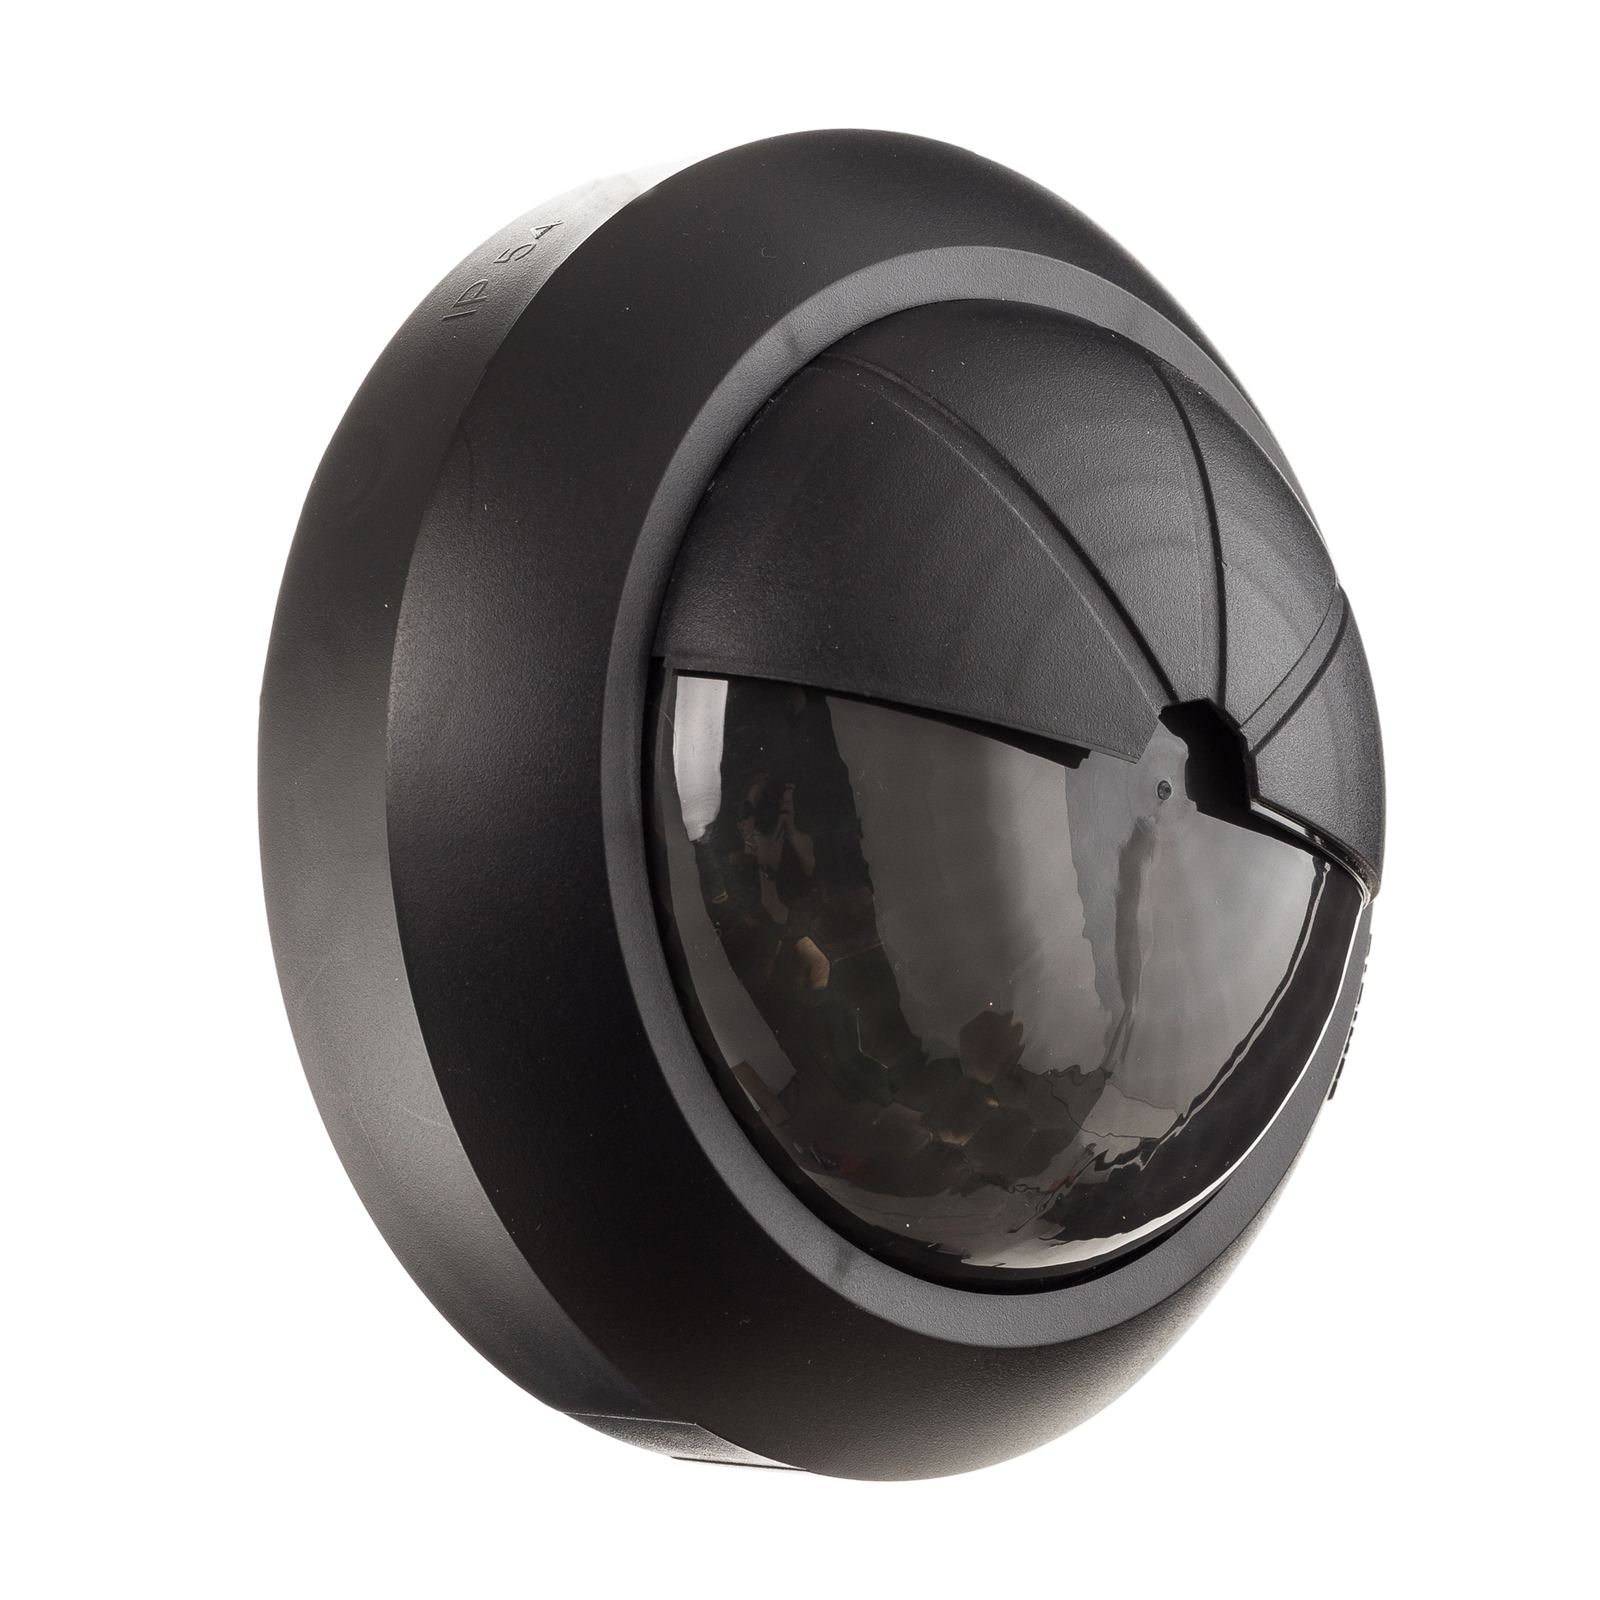 STEINEL IS 360-3 motion detector in black